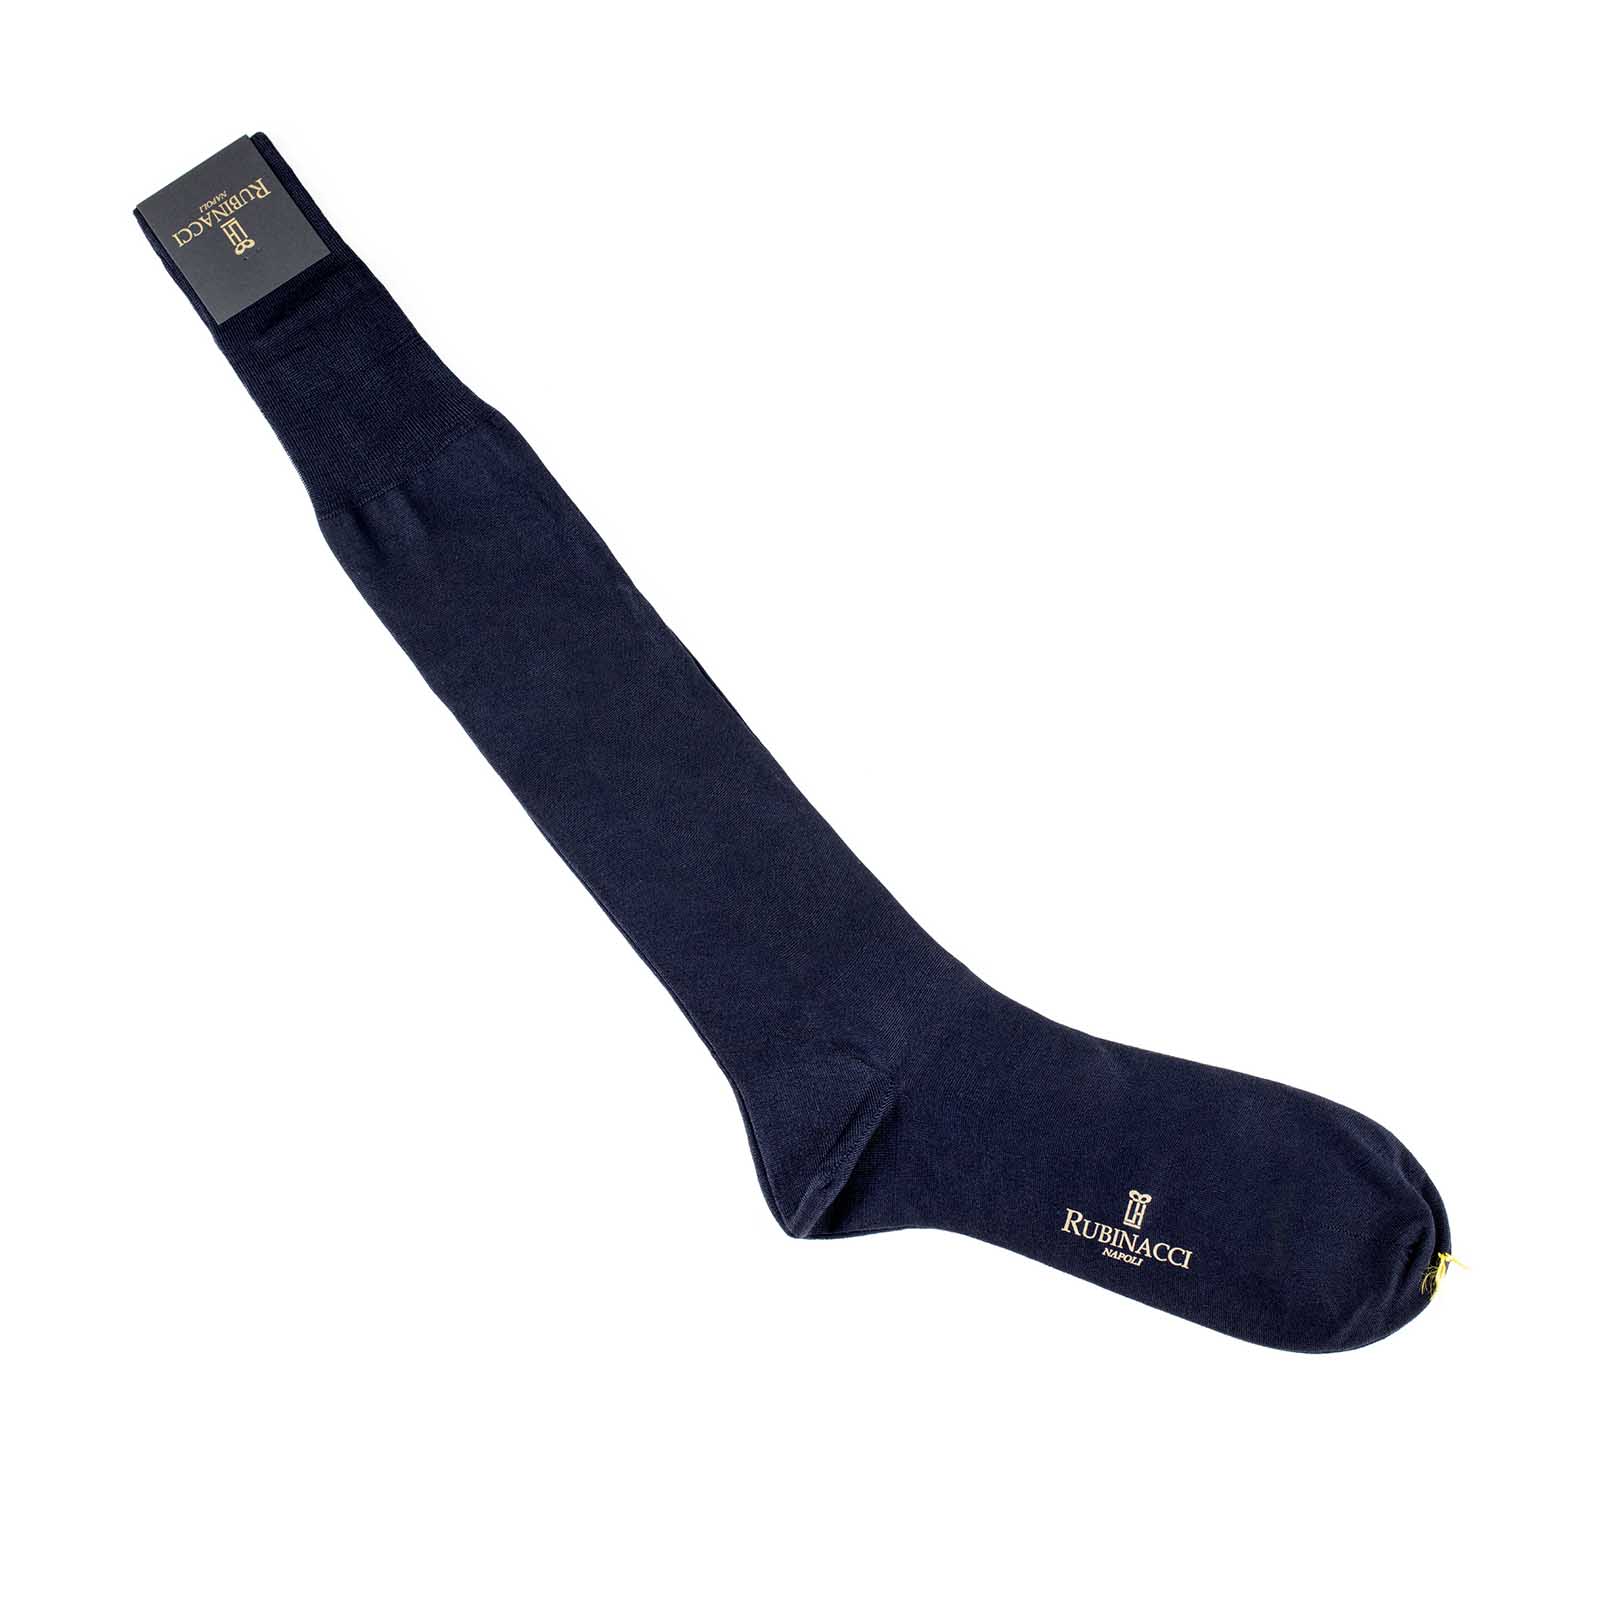 Mariano Rubinacci - Blue silk socks